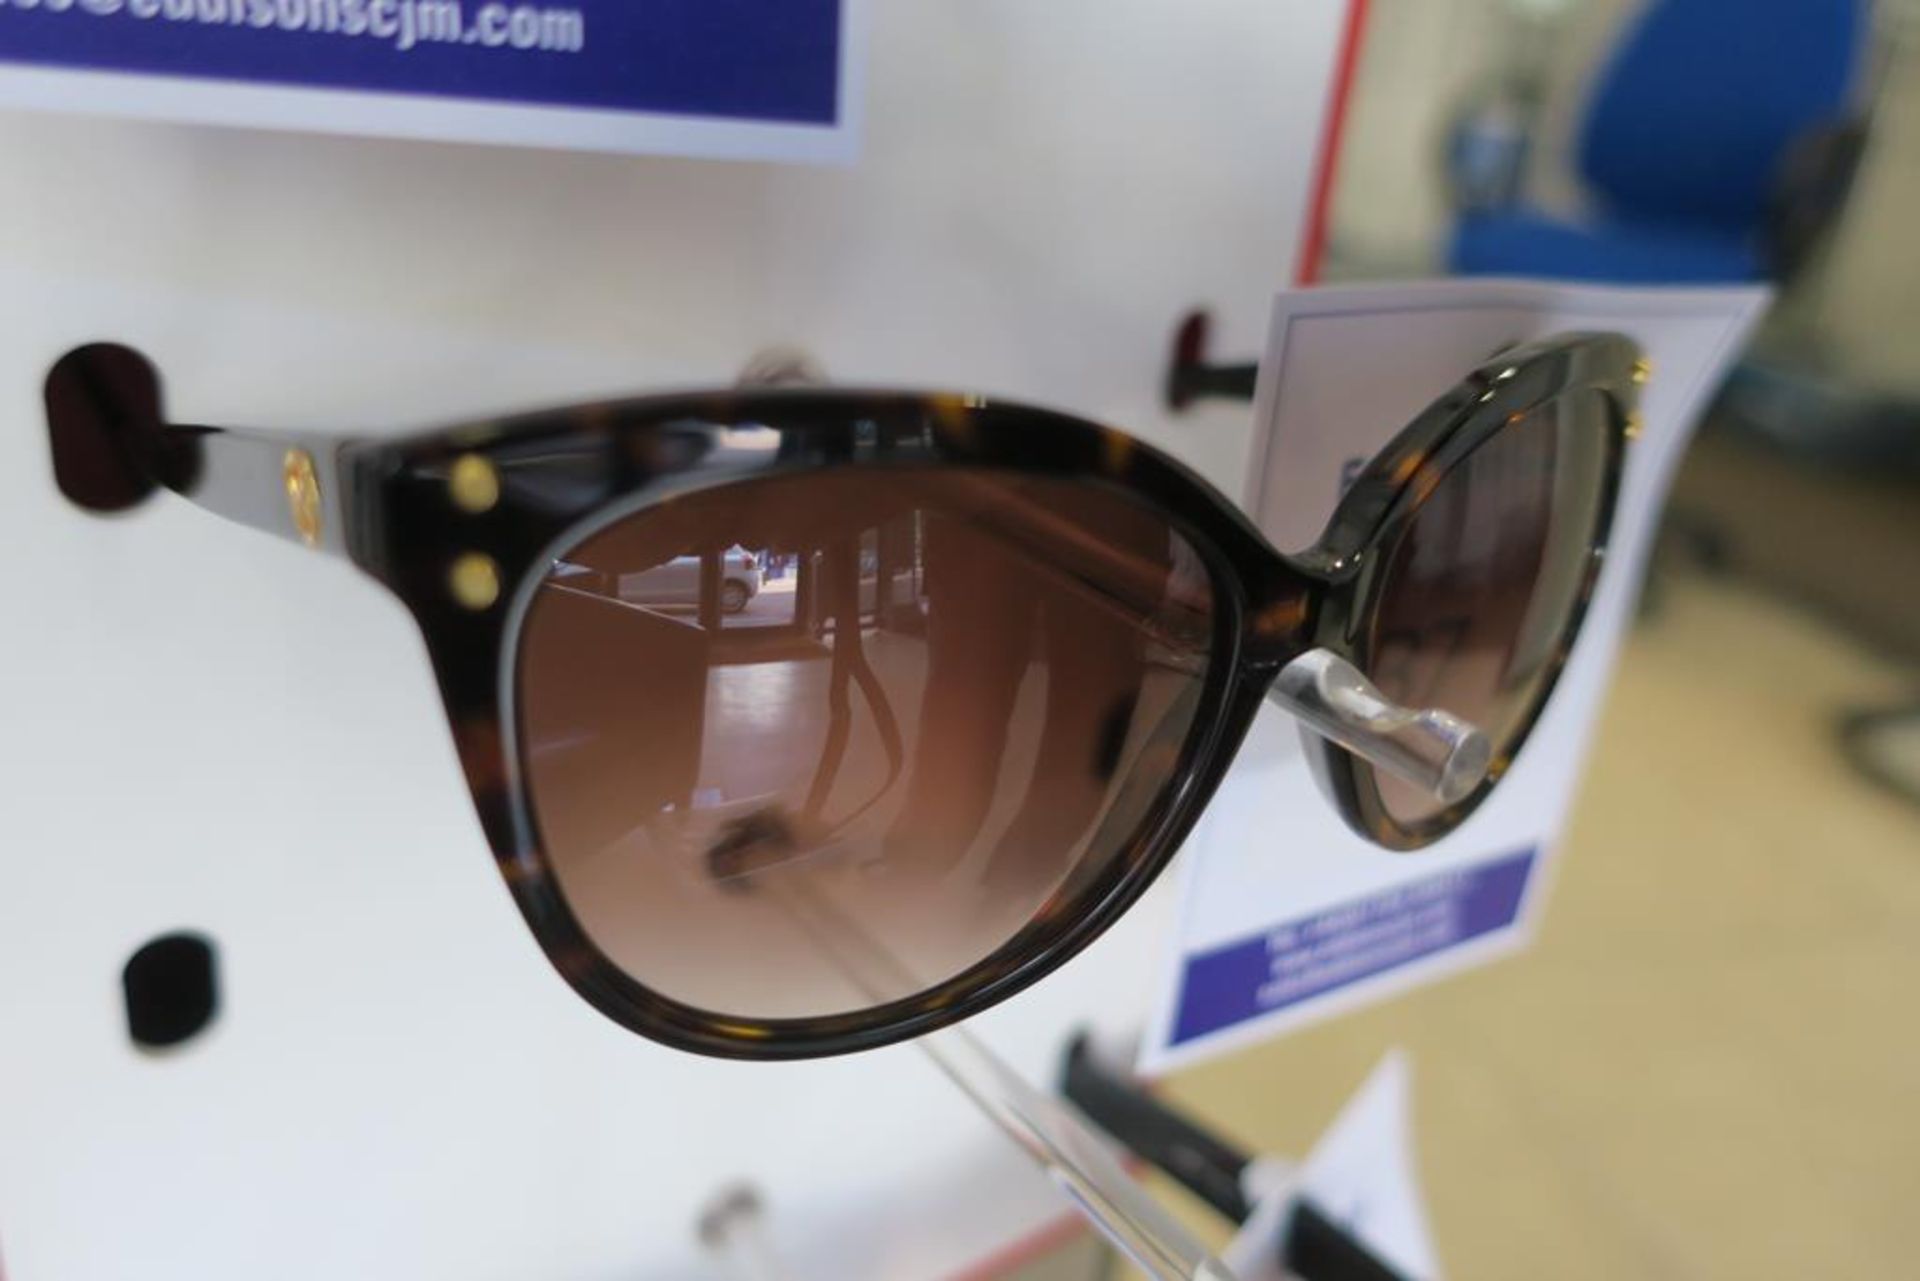 Pair of Michael Kors Sunglasses - Image 2 of 2